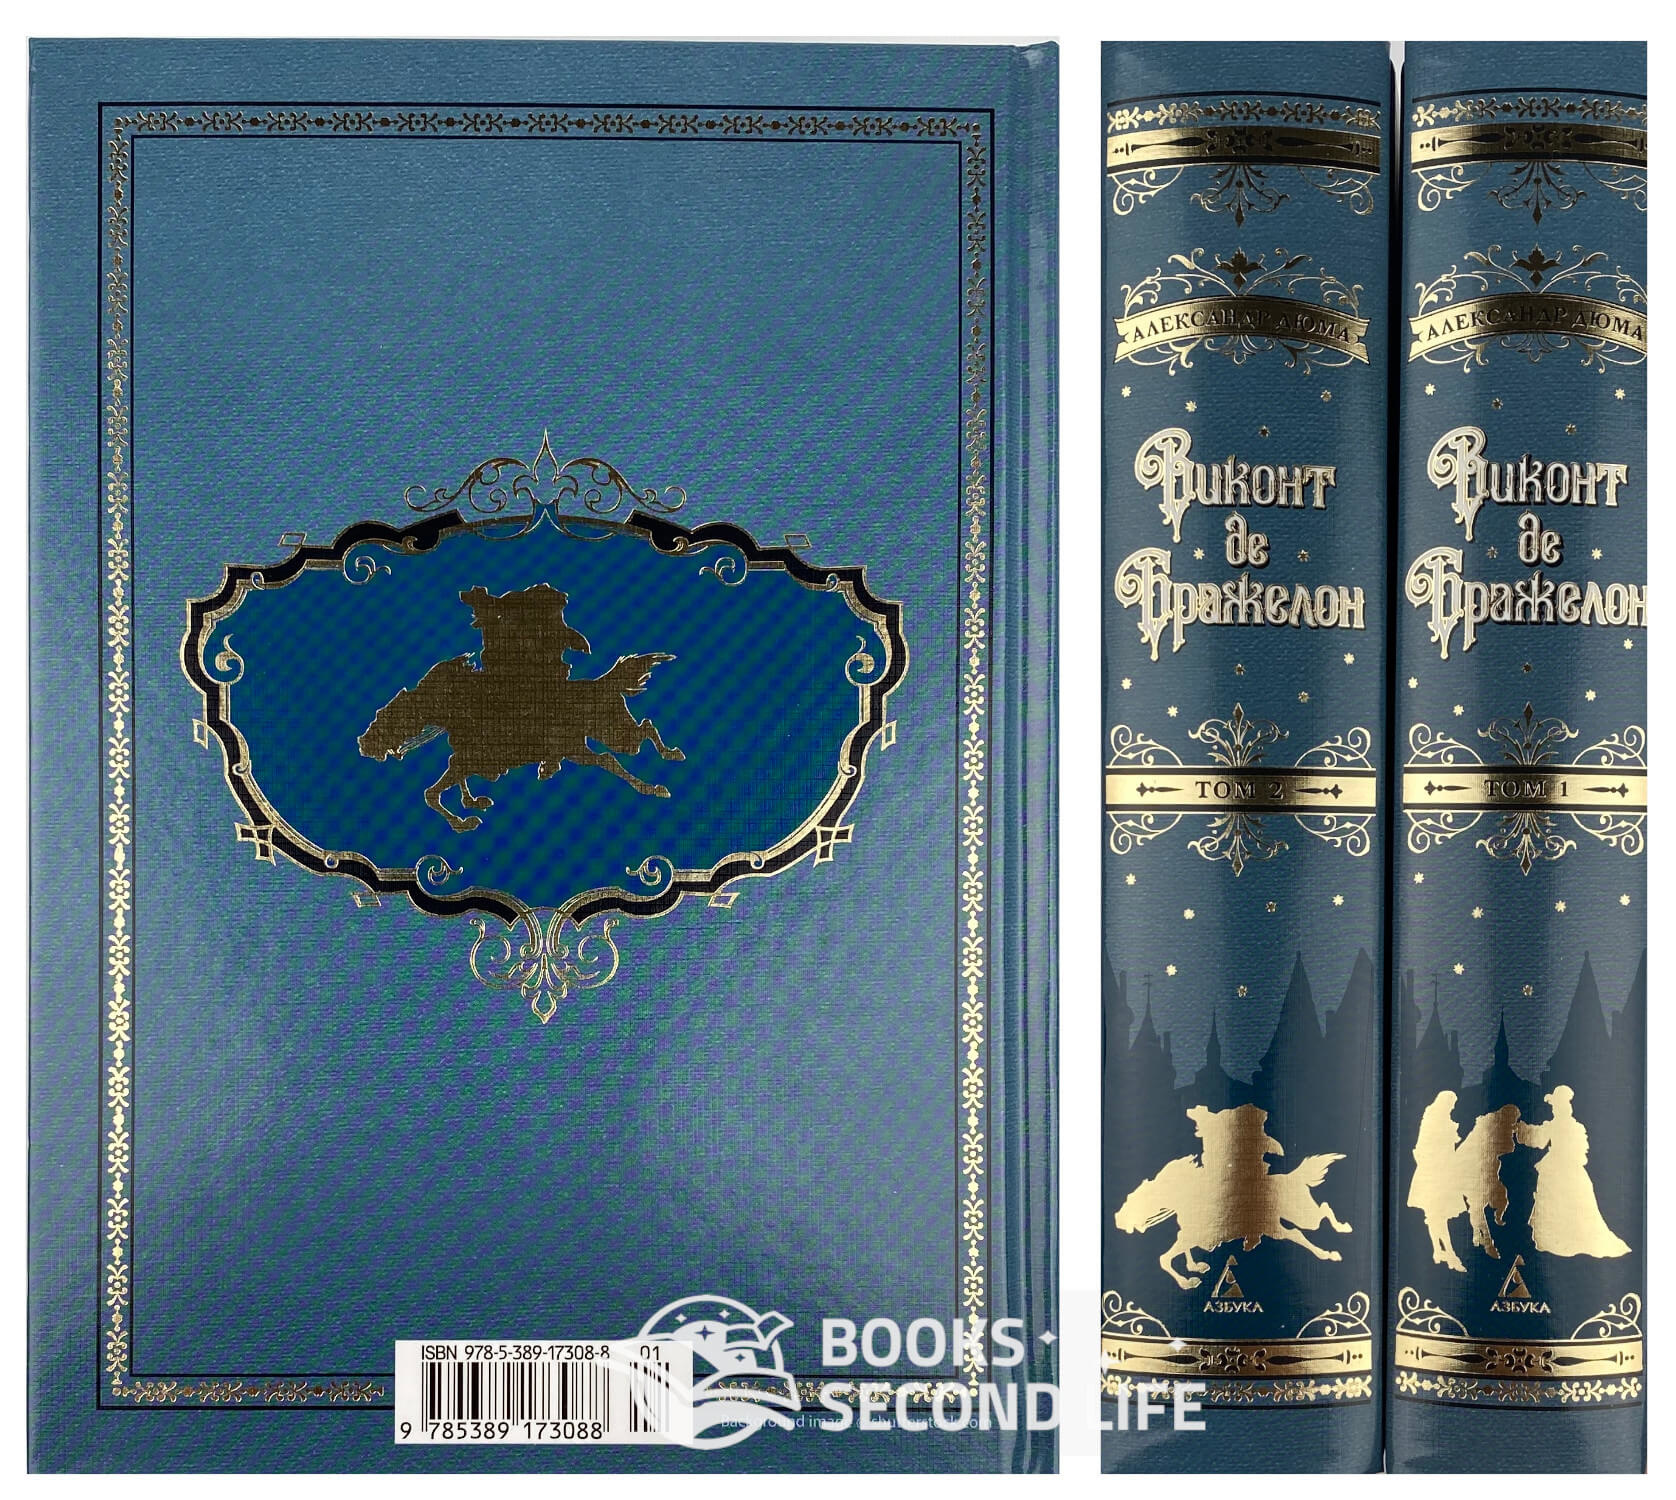 Виконт де Бражелон (комплект из двух книг). Автор — Александр Дюма. 